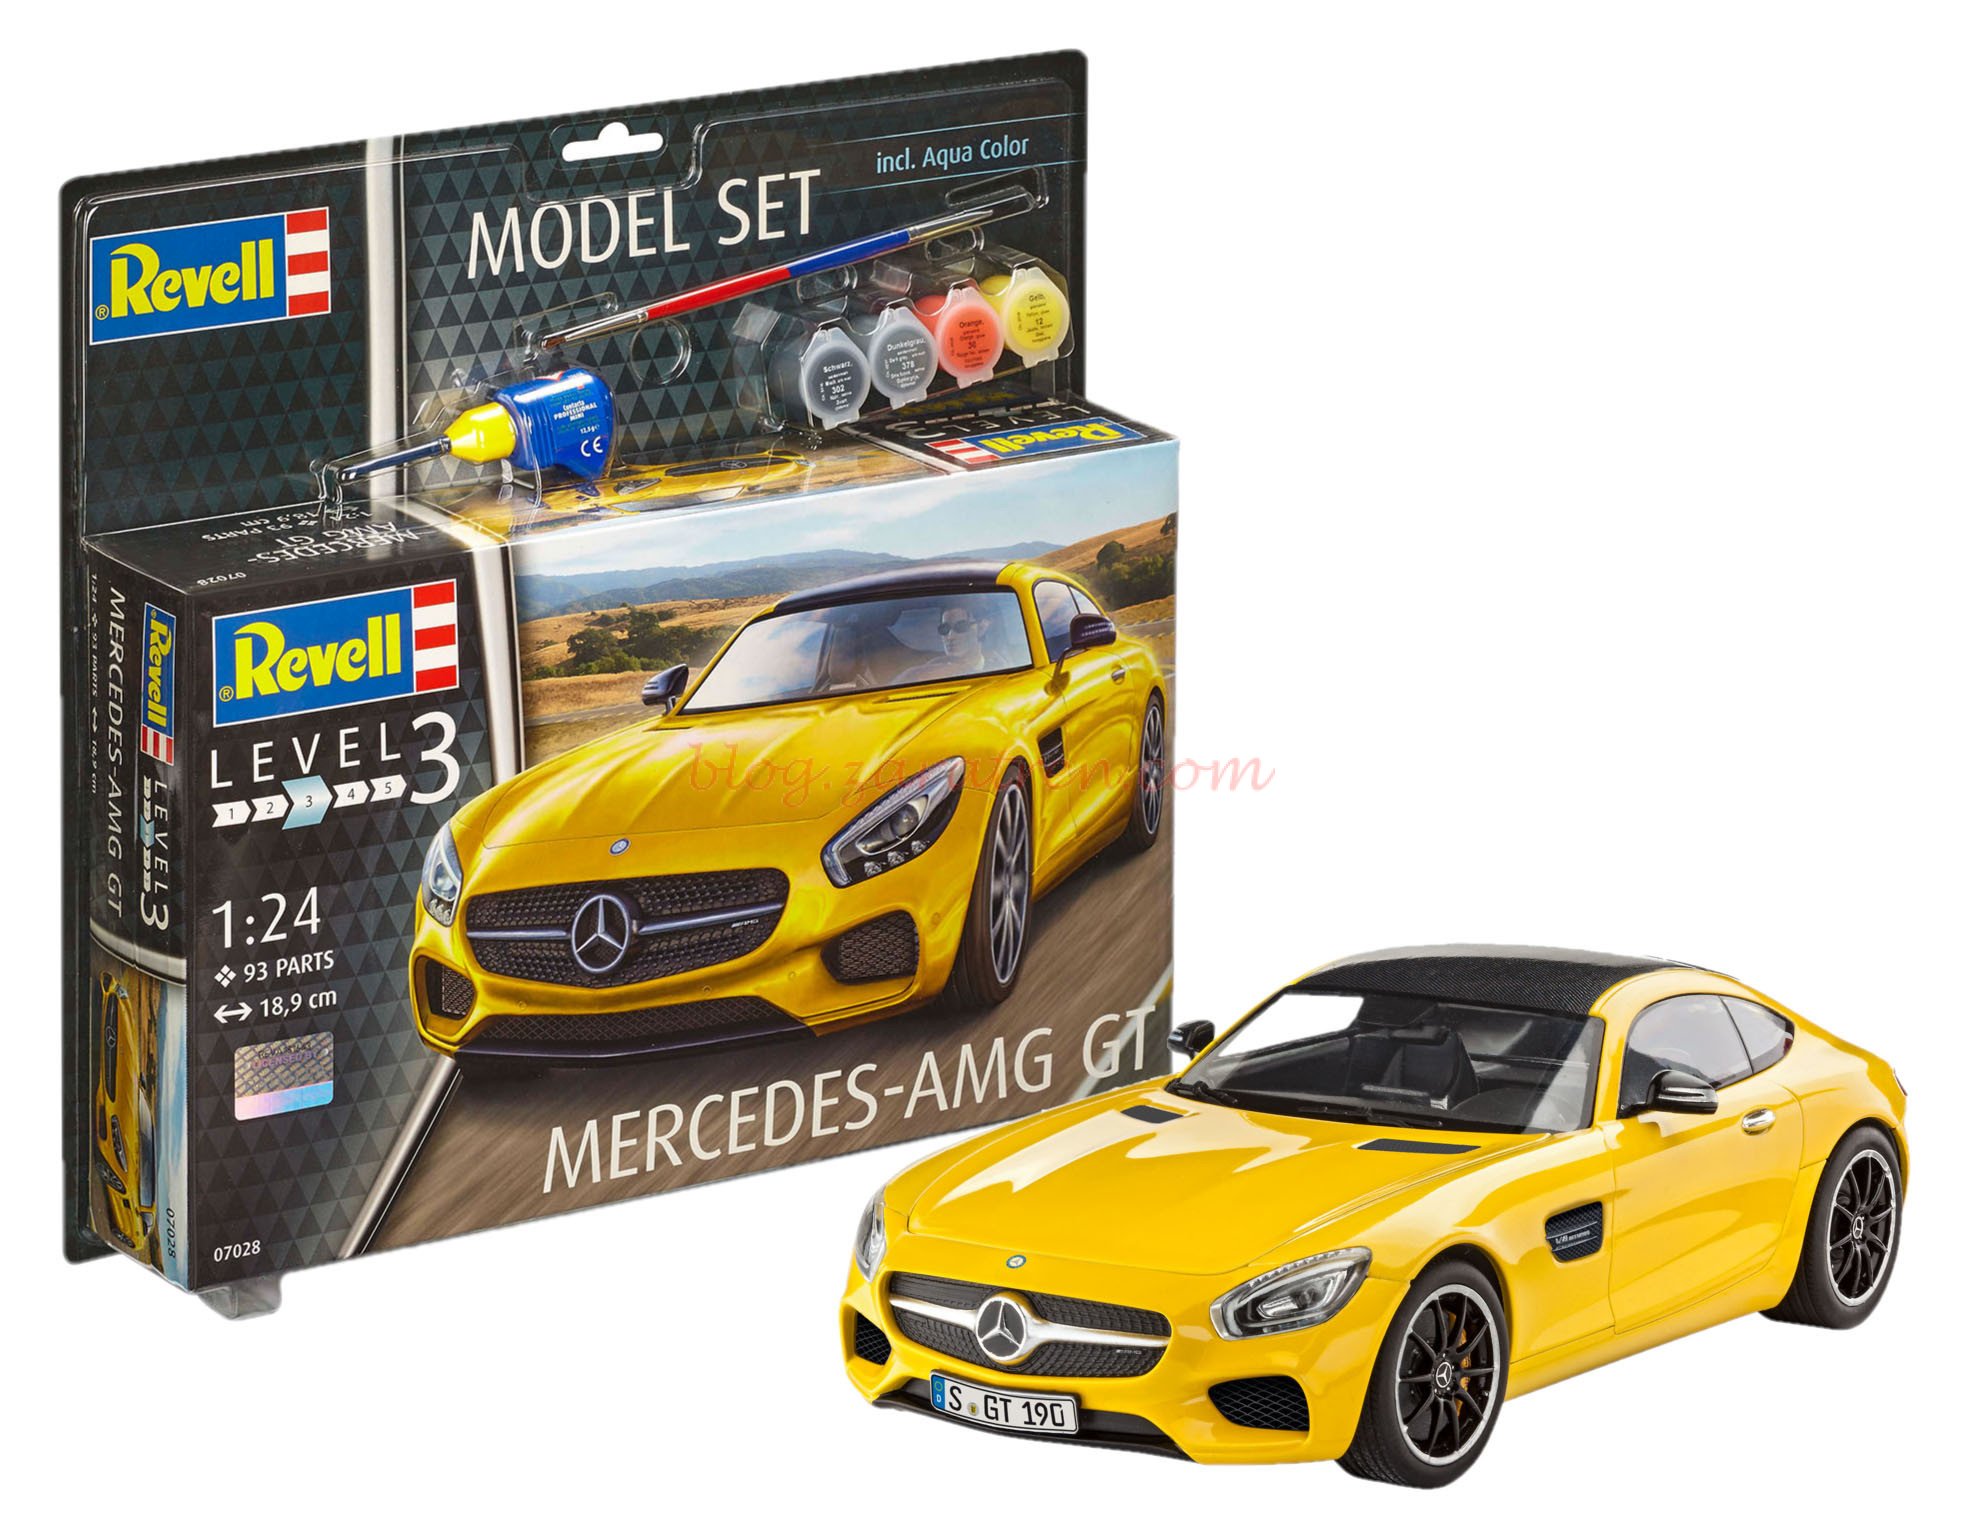 Revell – Mercedes-AMG GT, Escala 1:24, Ref: 67028